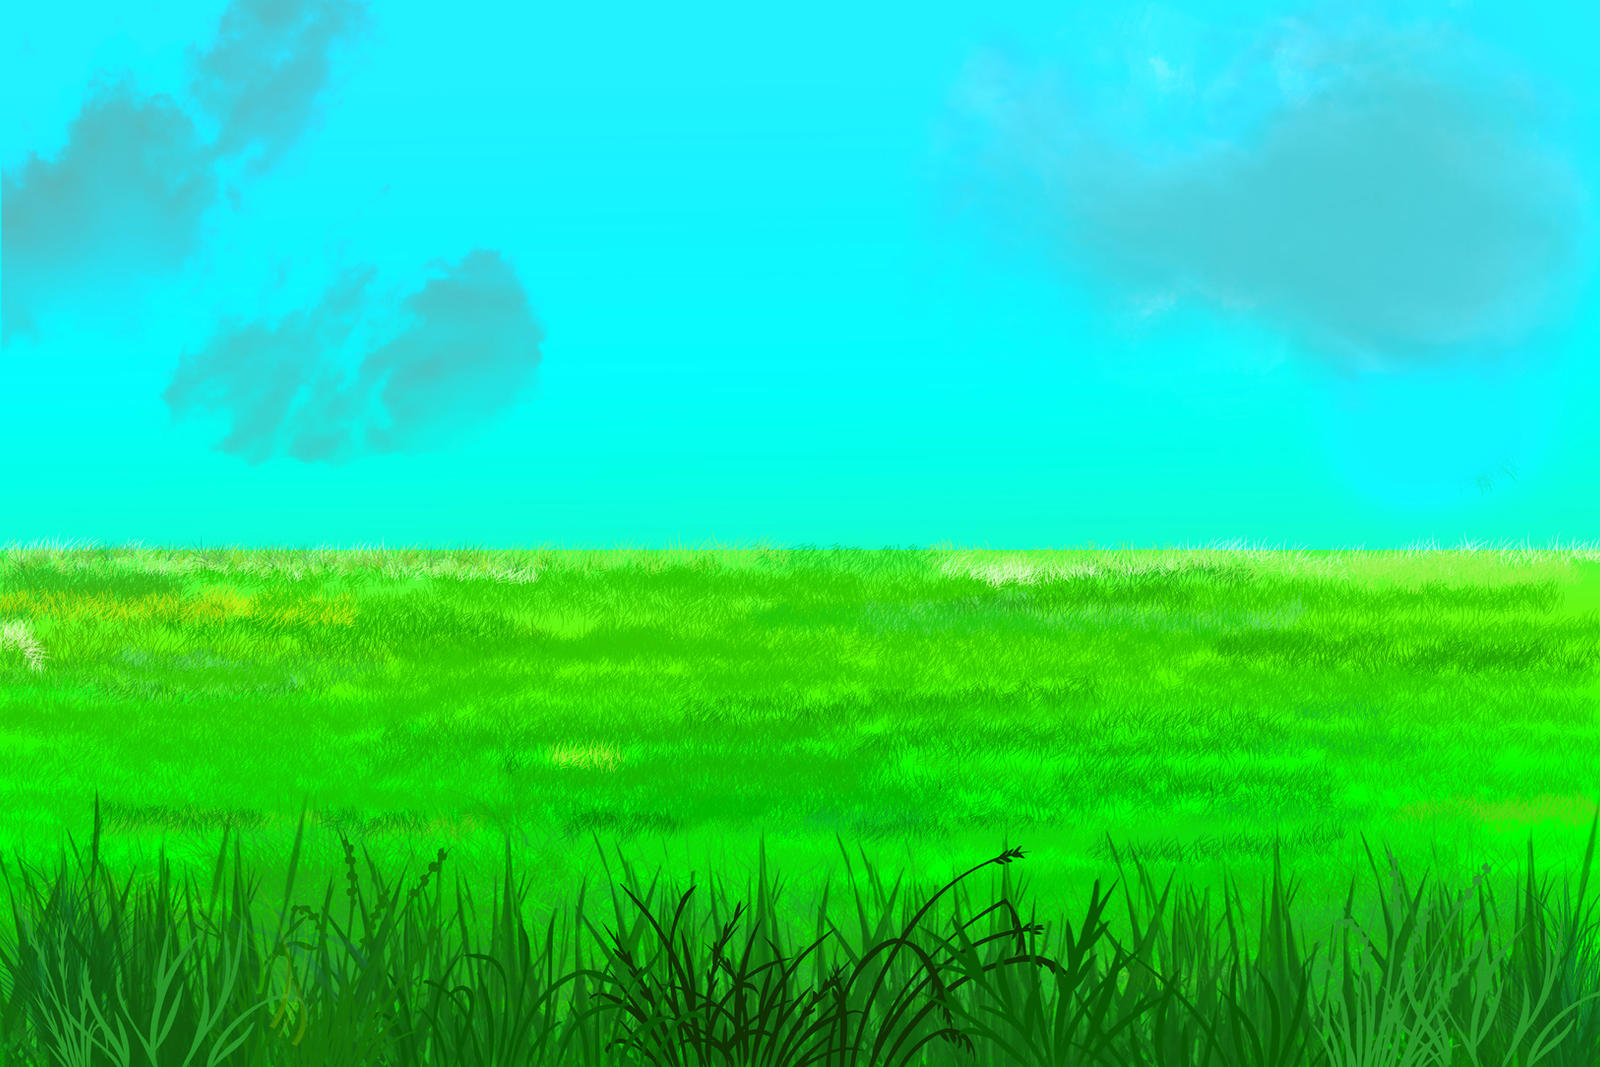 Anime Background - Classroom by FireSnake666 on DeviantArt